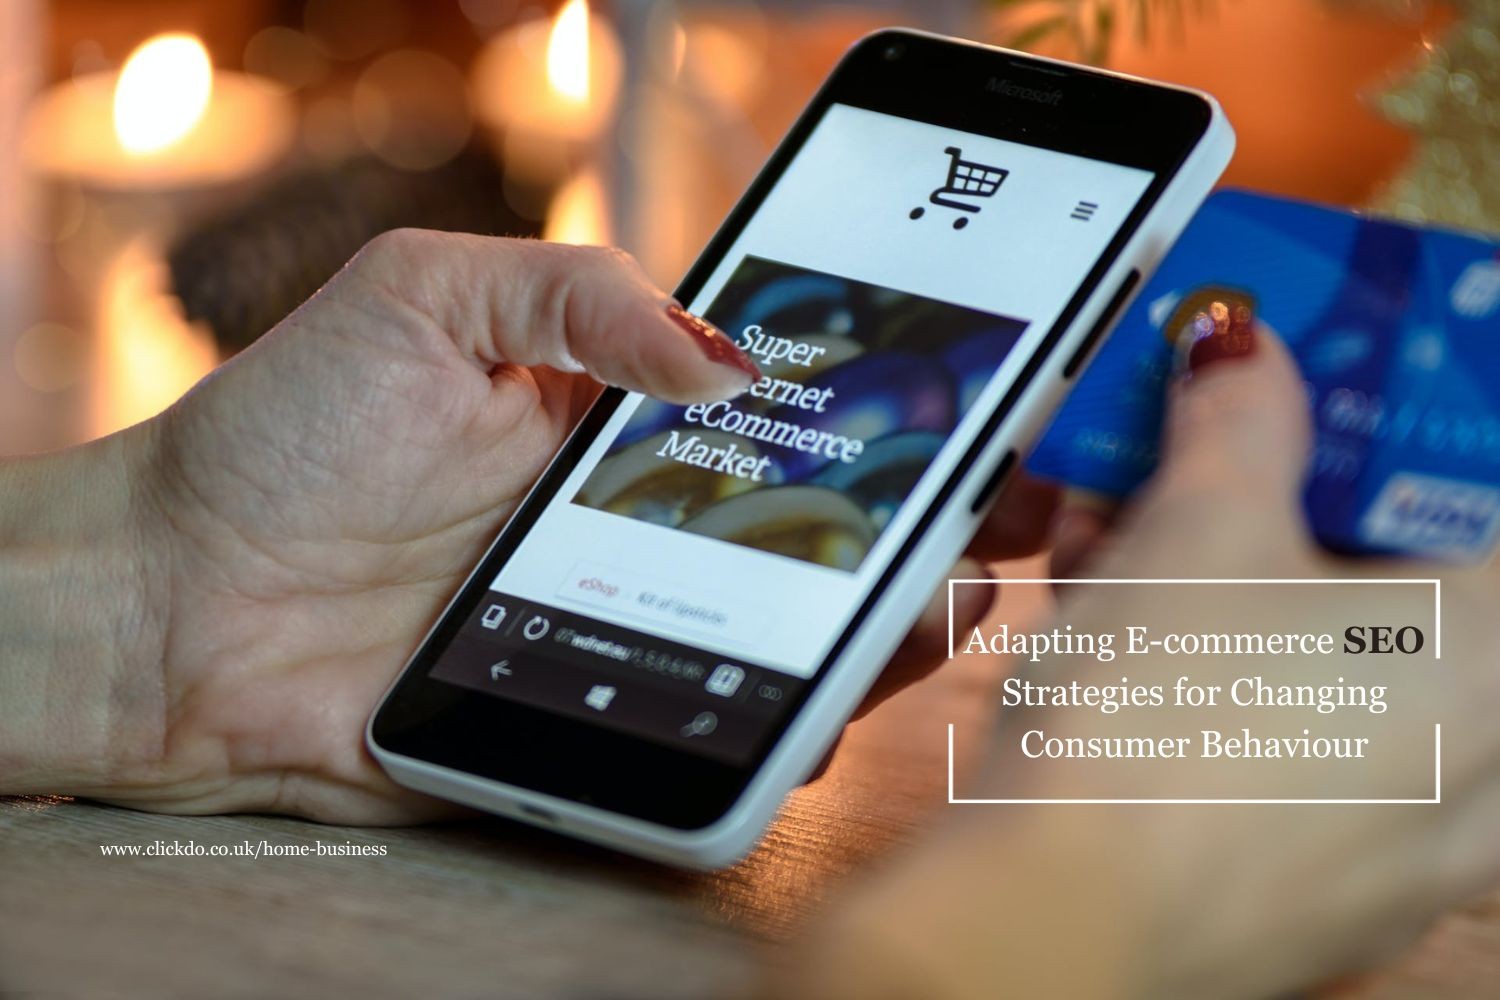 ecommerce-seo-strategies-for-consumer-behaviour